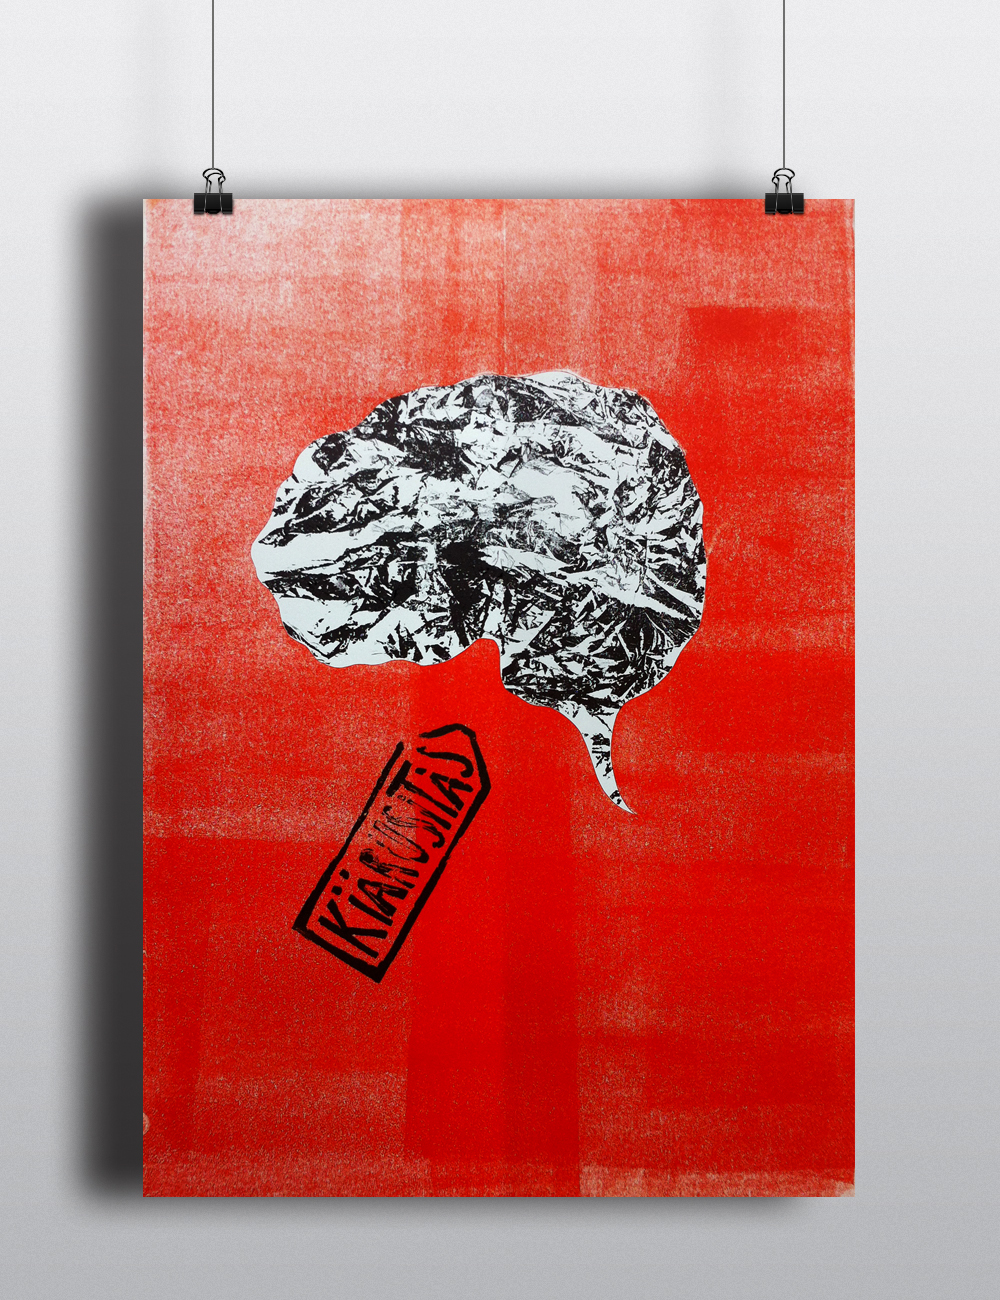 poster posters silkscreen woodcut School Work Glitch pictogram Election design week budapest stylewalker